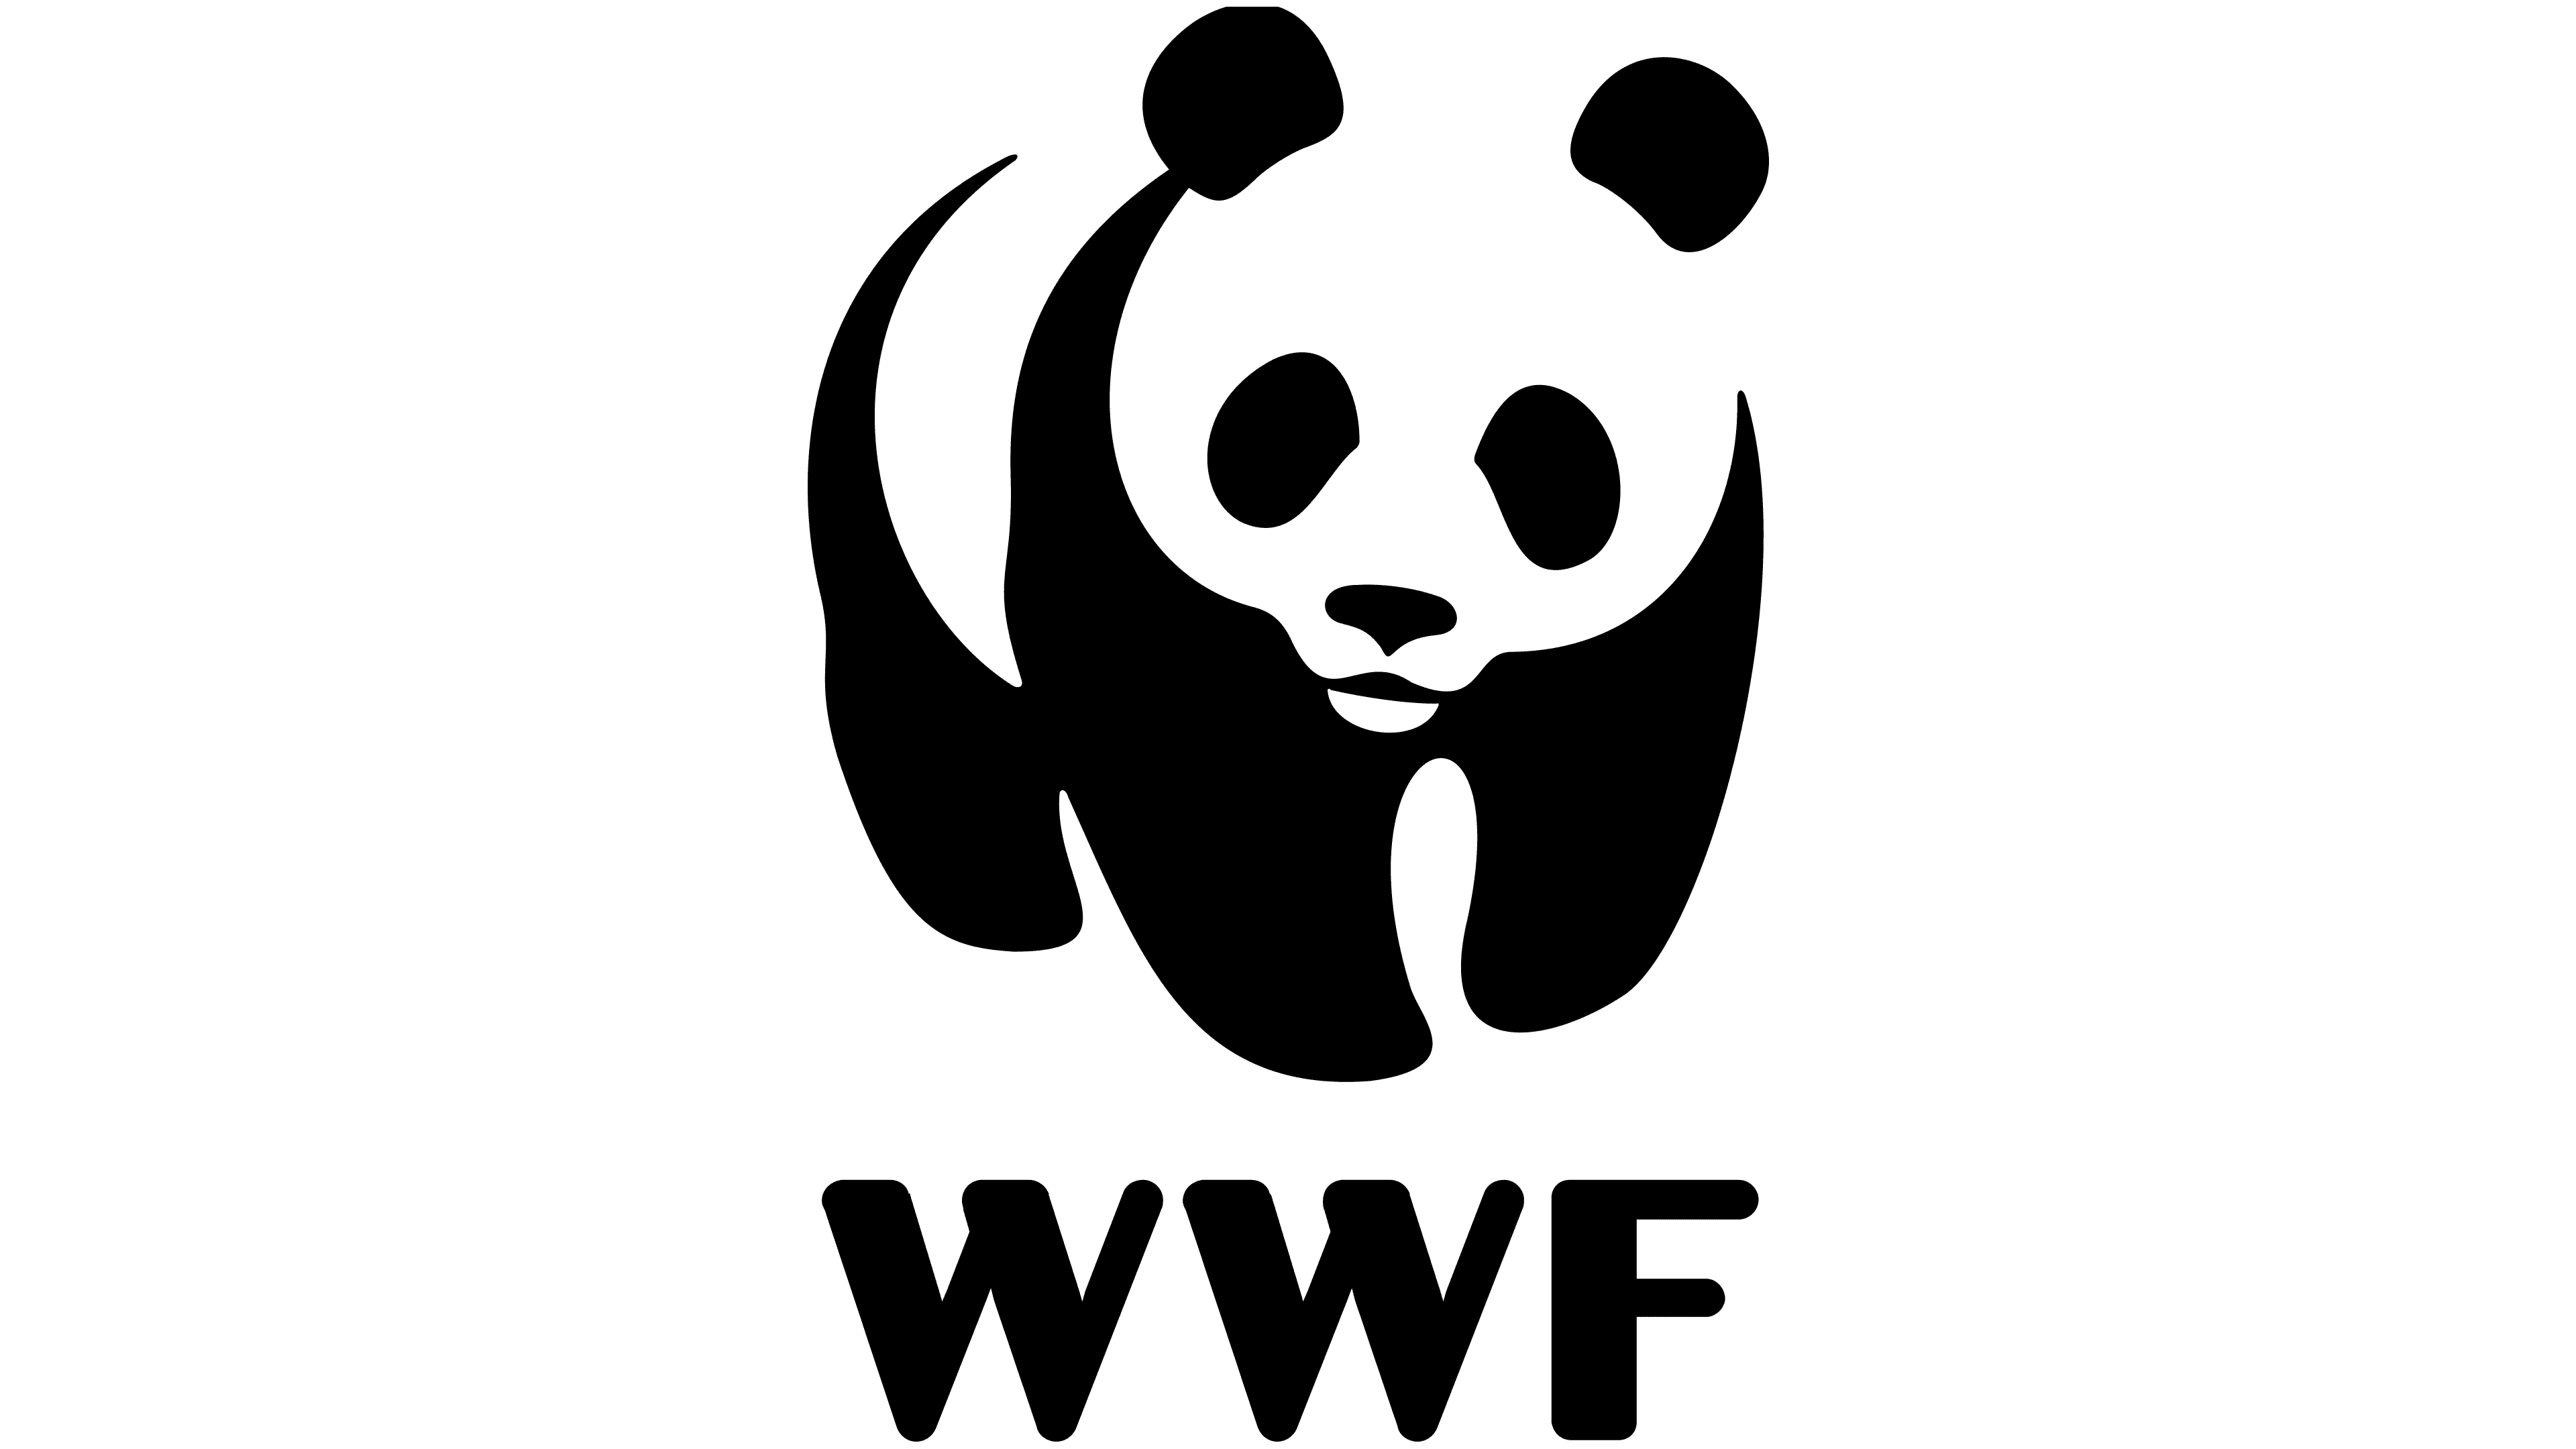 WWF Danmark